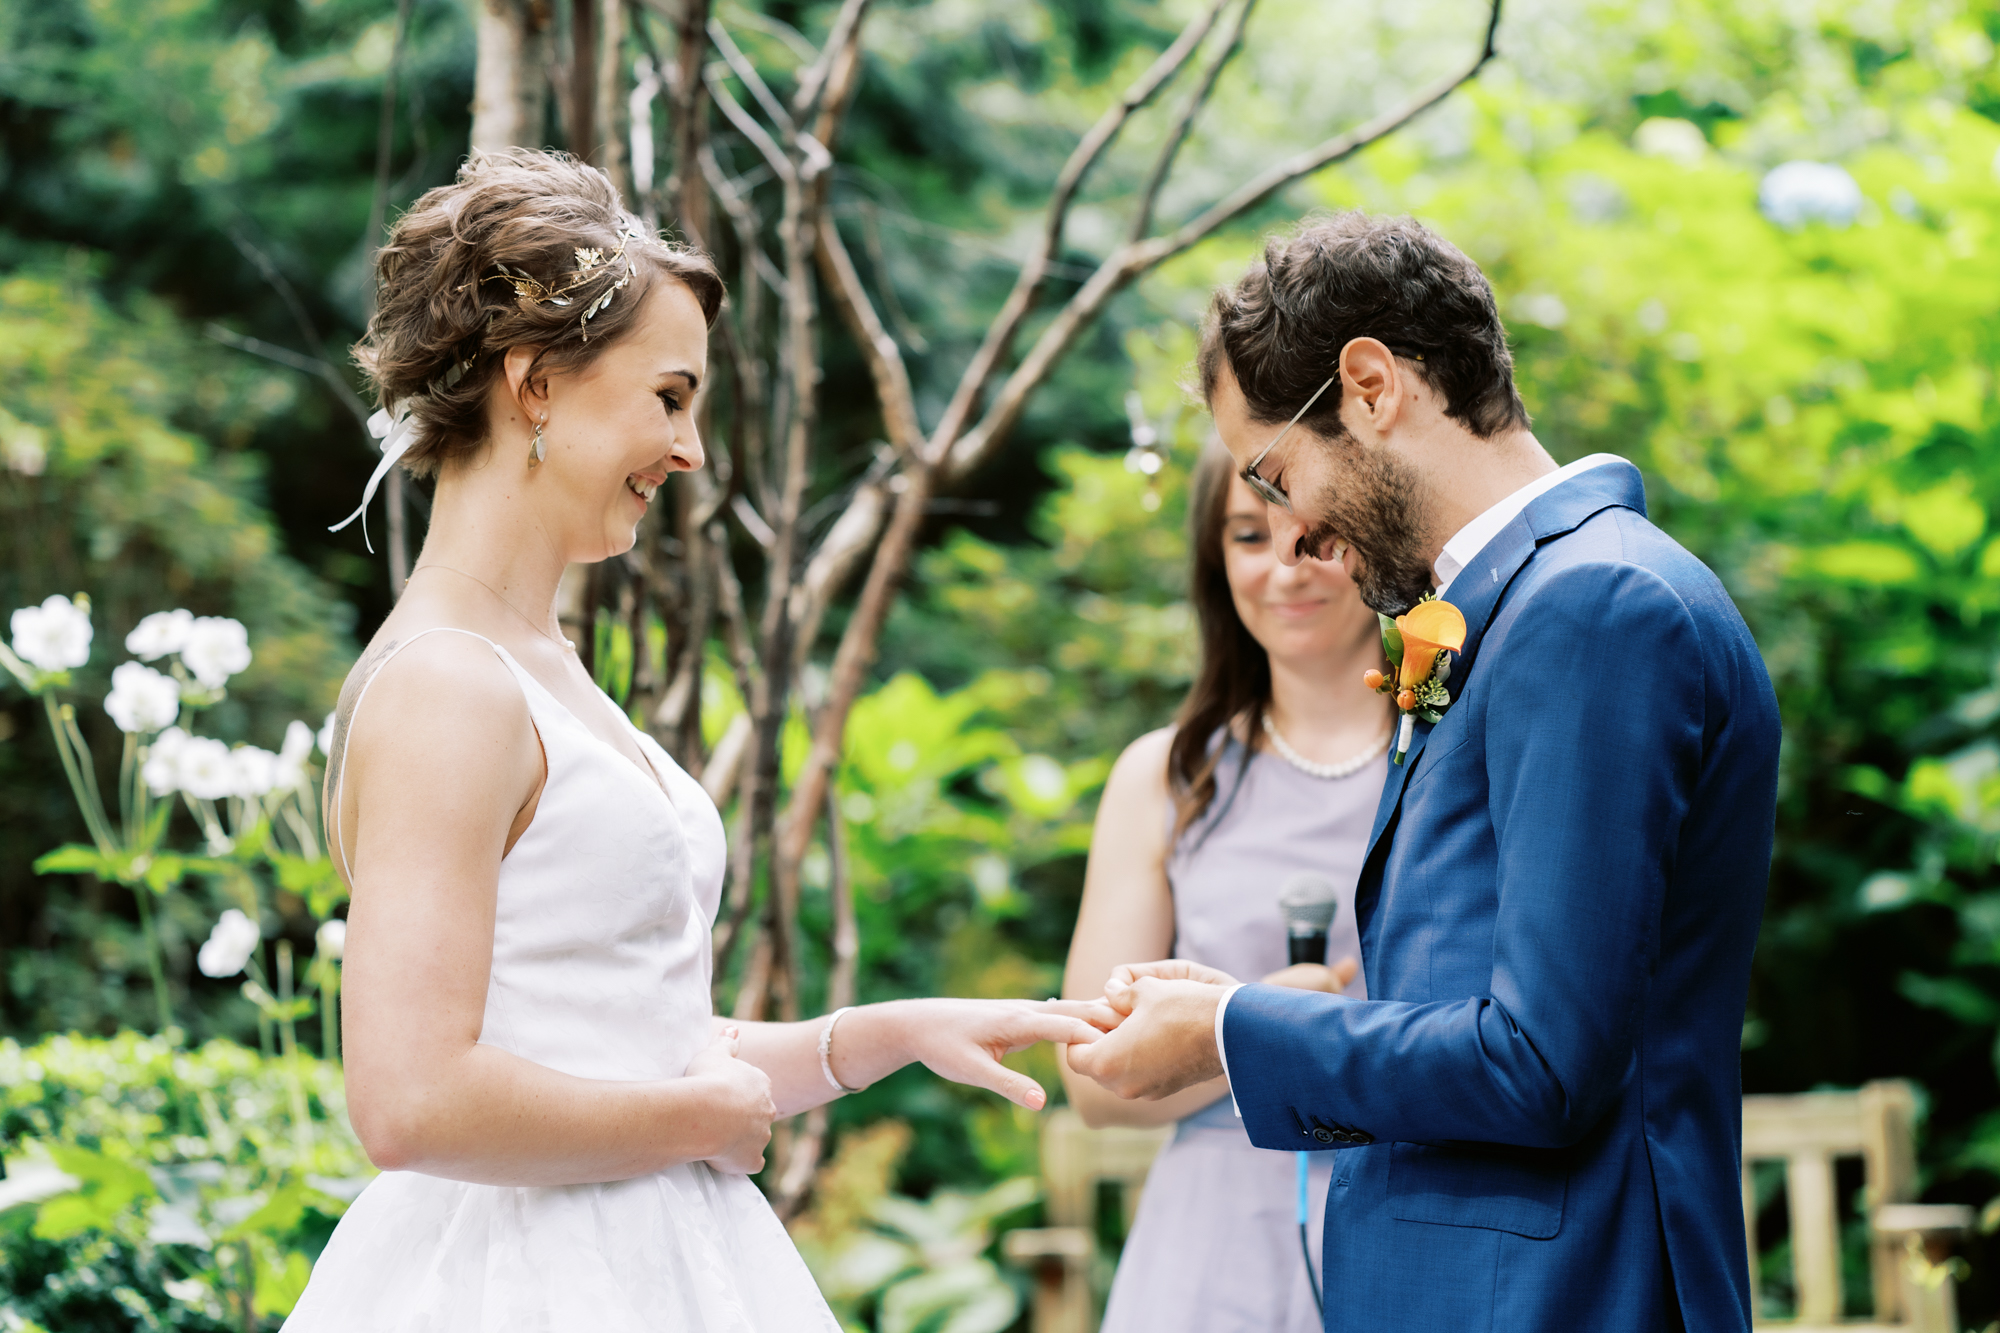 Dunn Garden Weddings: Amy and Scott exchange rings